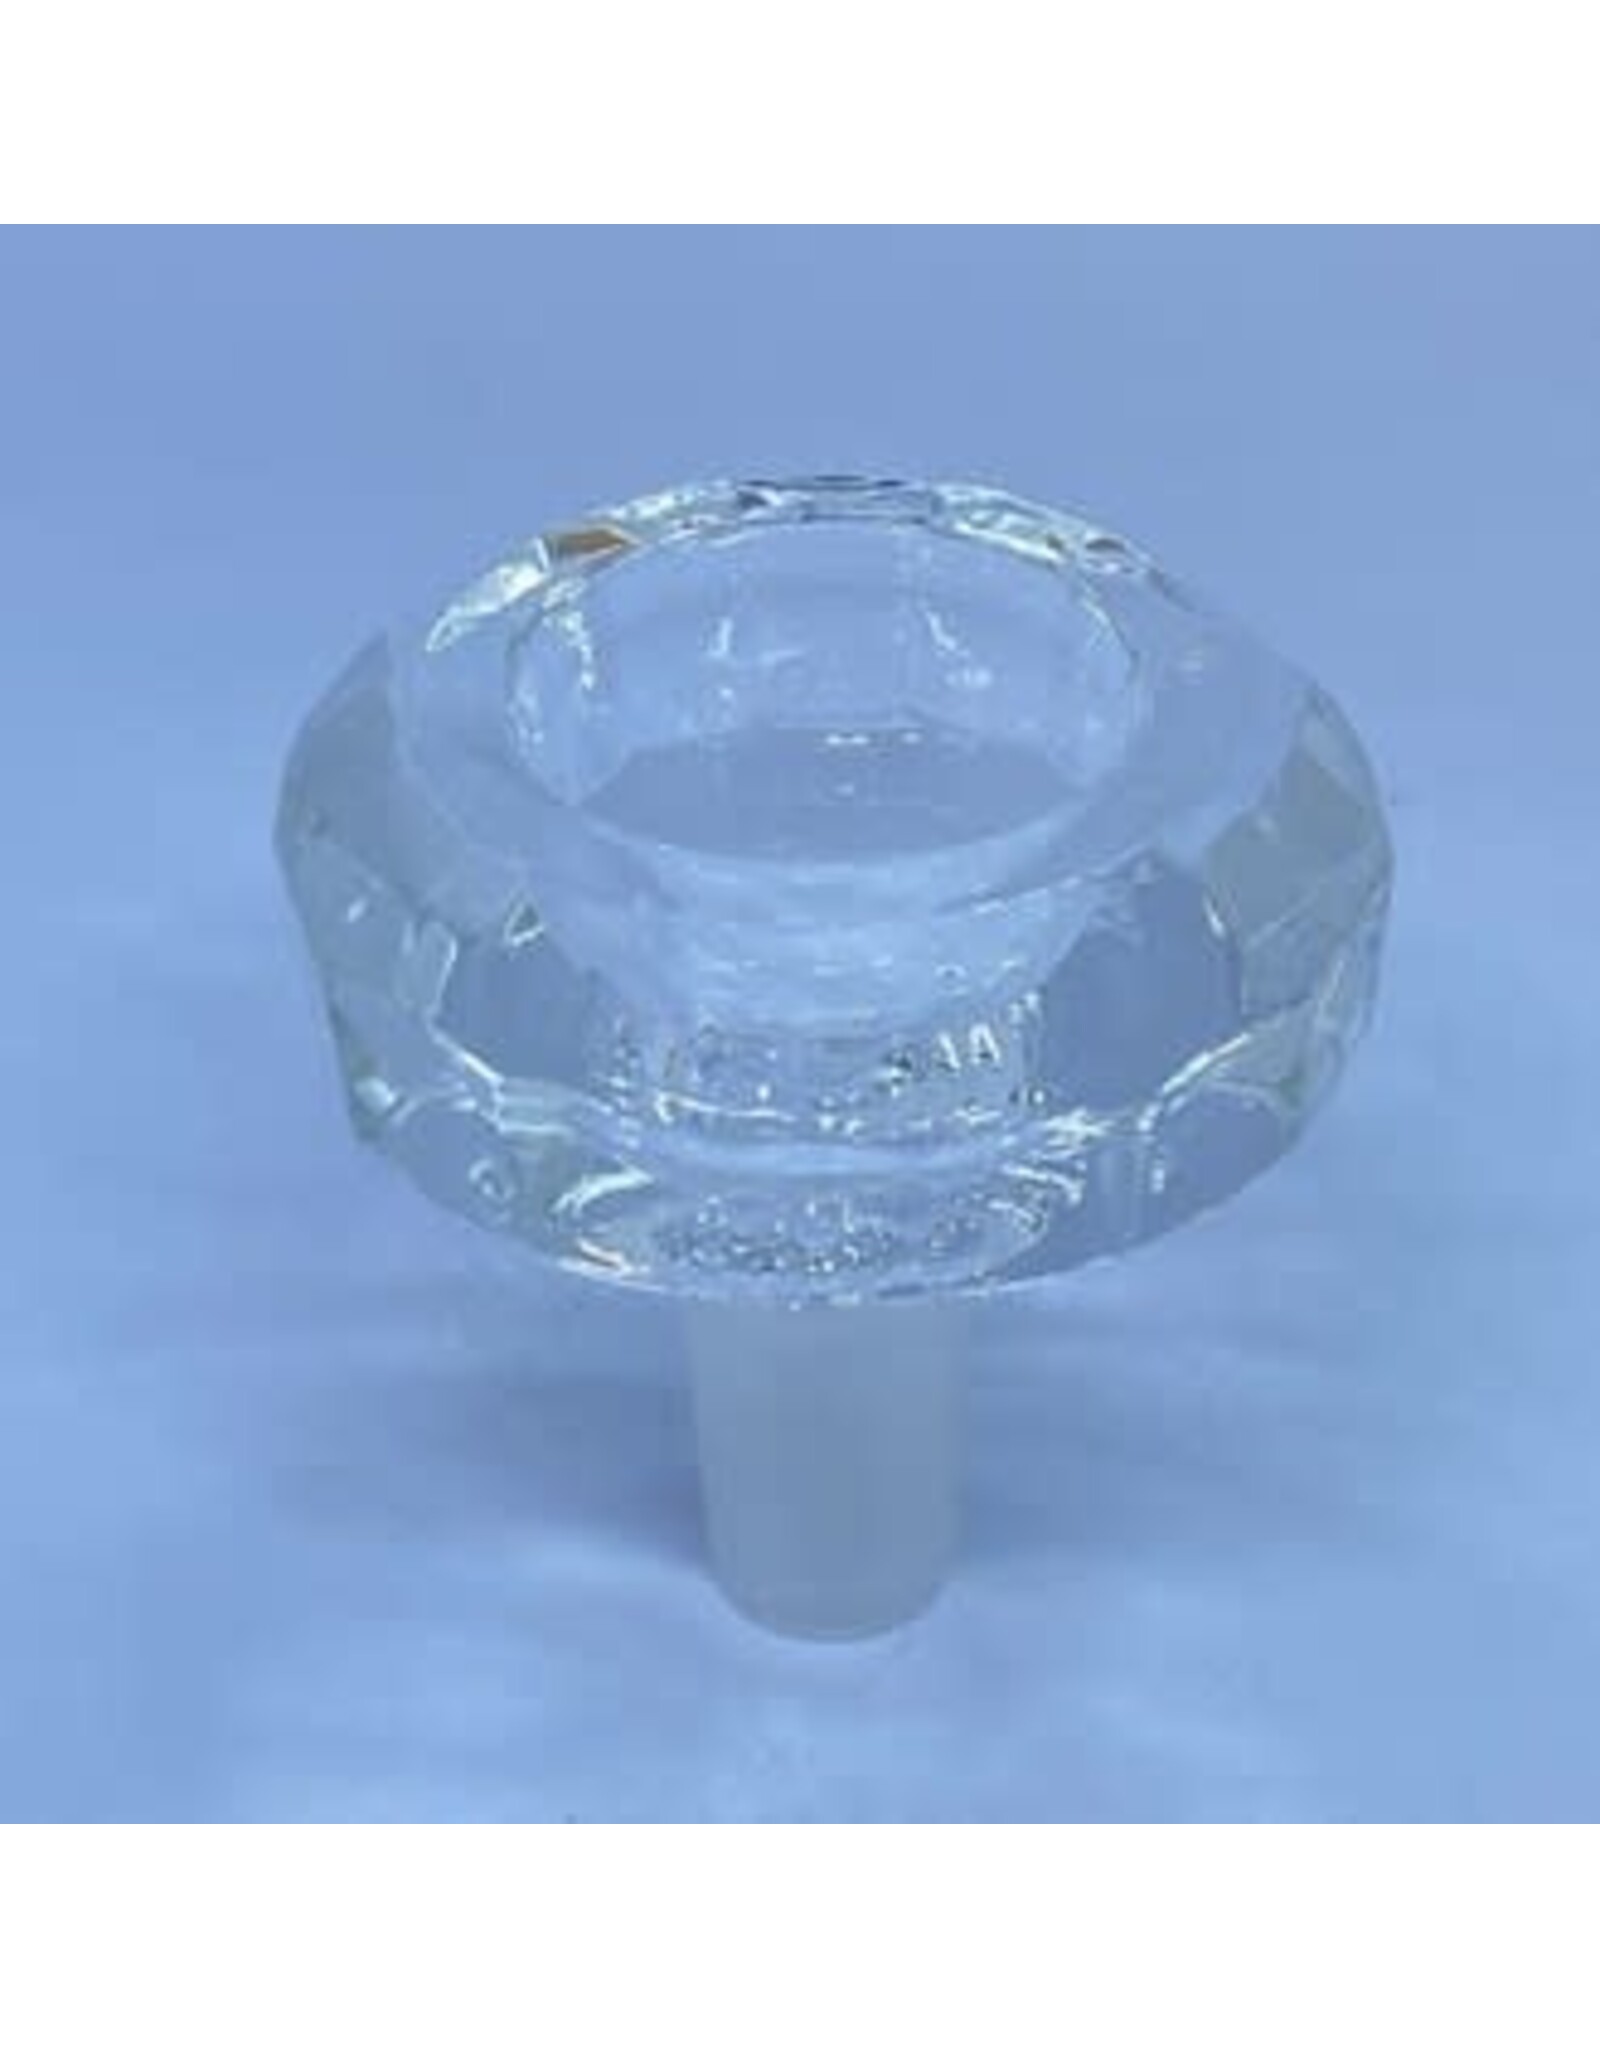 Smokerz Glass SMKZ              14mm Clear Diamond Cut Large Bowl    A009